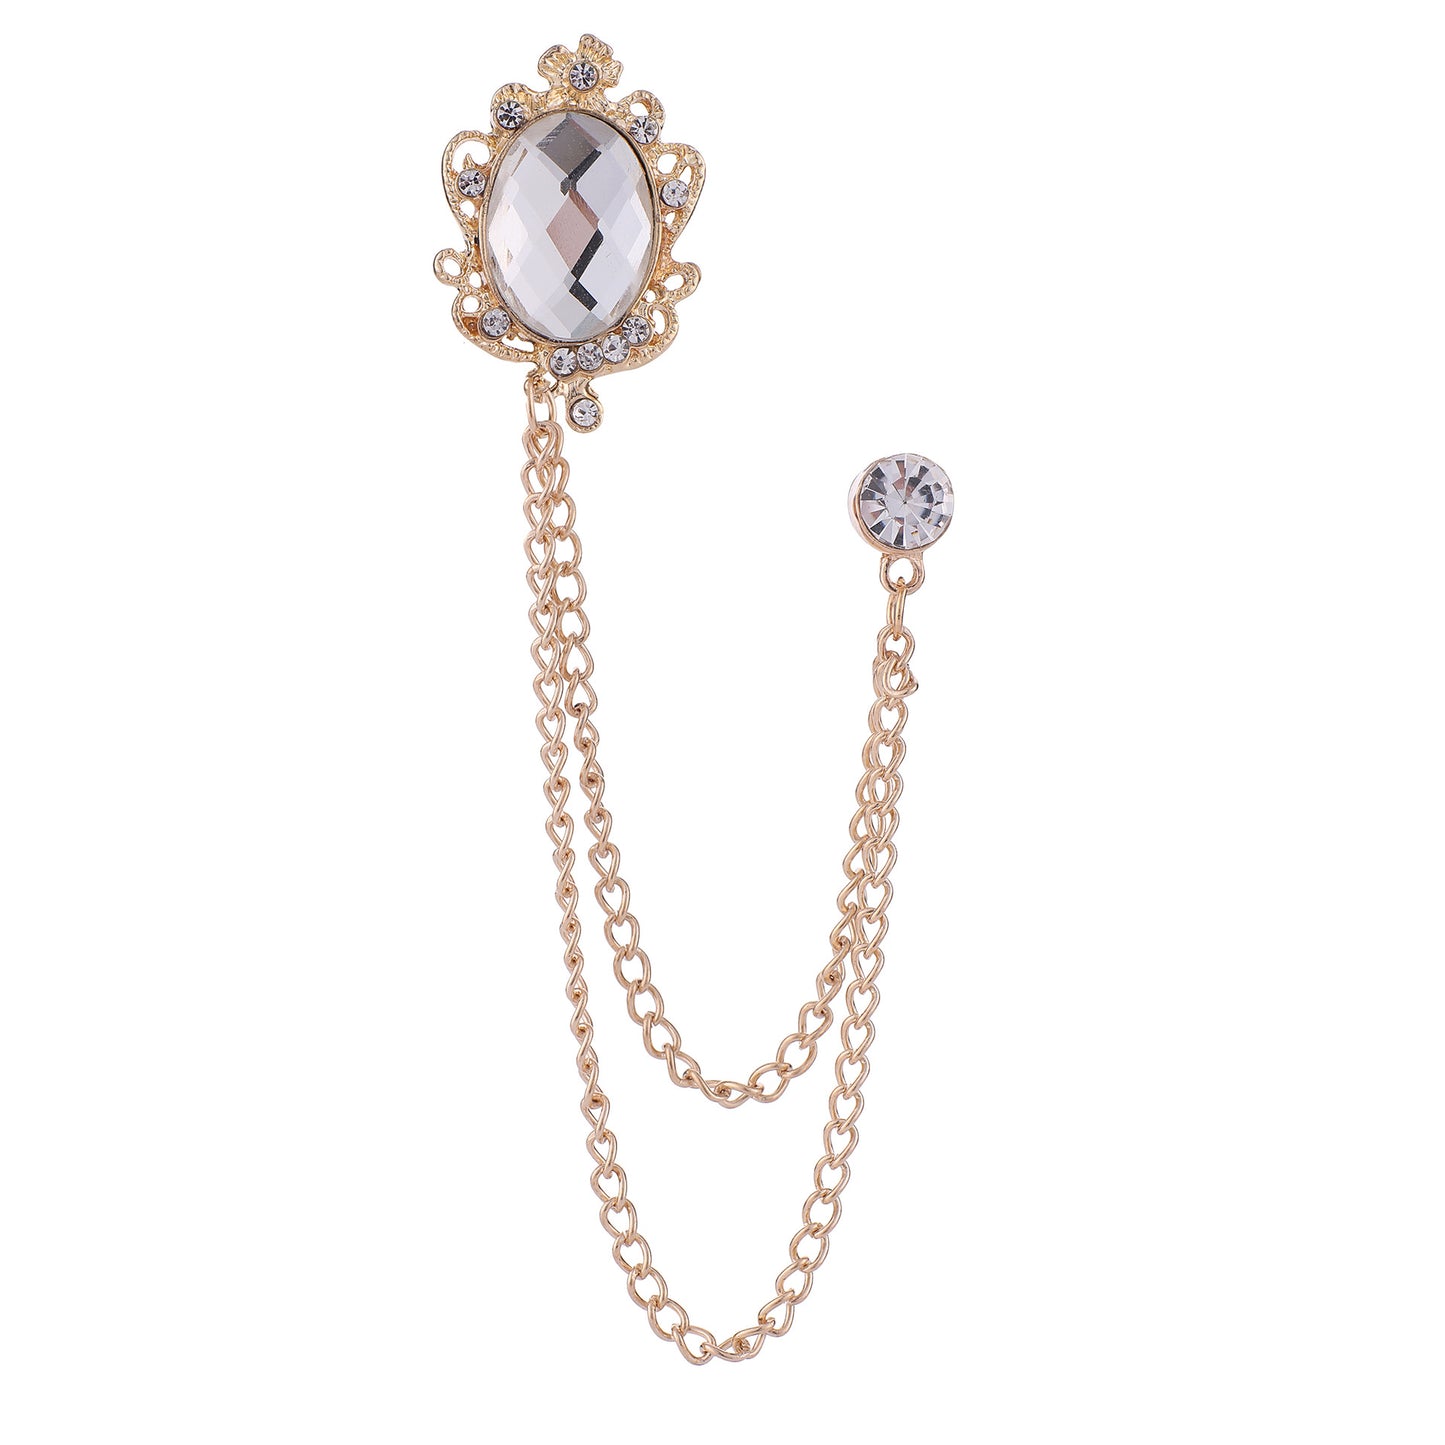 FSALP-001 Custom Luxury Fashion Jewelry Brooches Tassel Chain